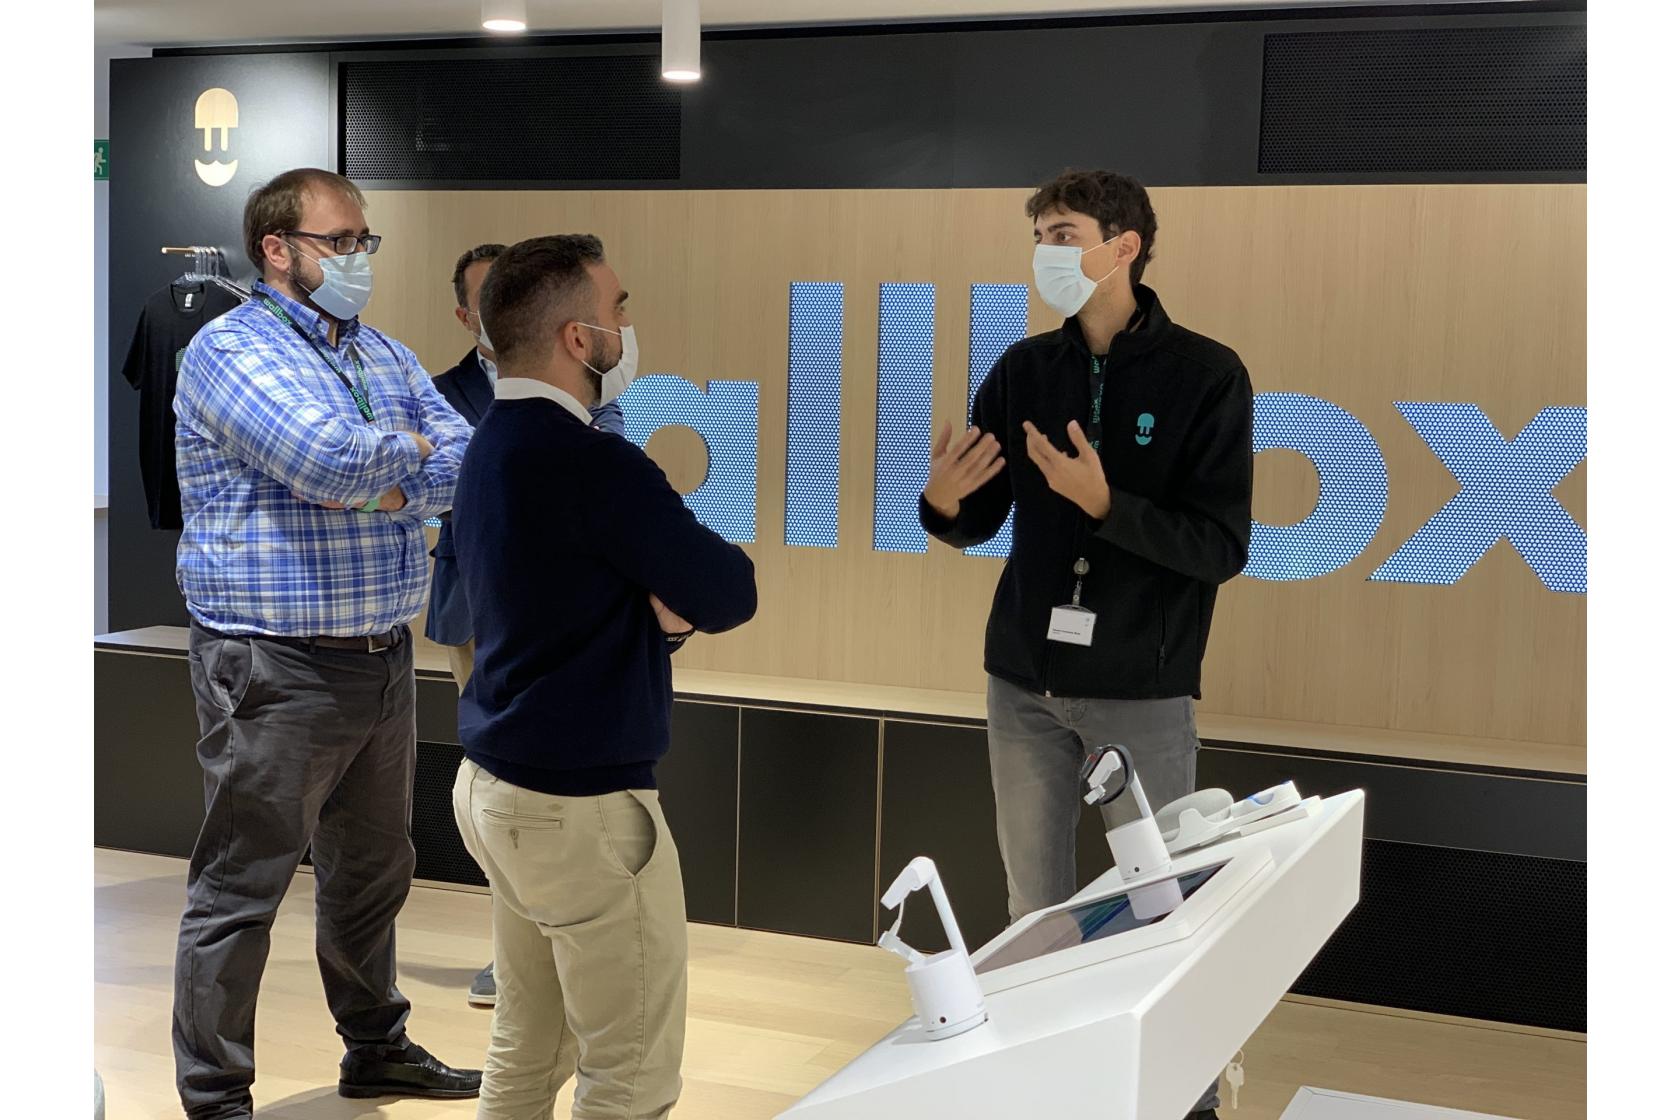 Wallbox receives the visit of Francisco Polo, High Commissioner for Spain’s entrepreneurship and innovation program España Nación Emprendedora